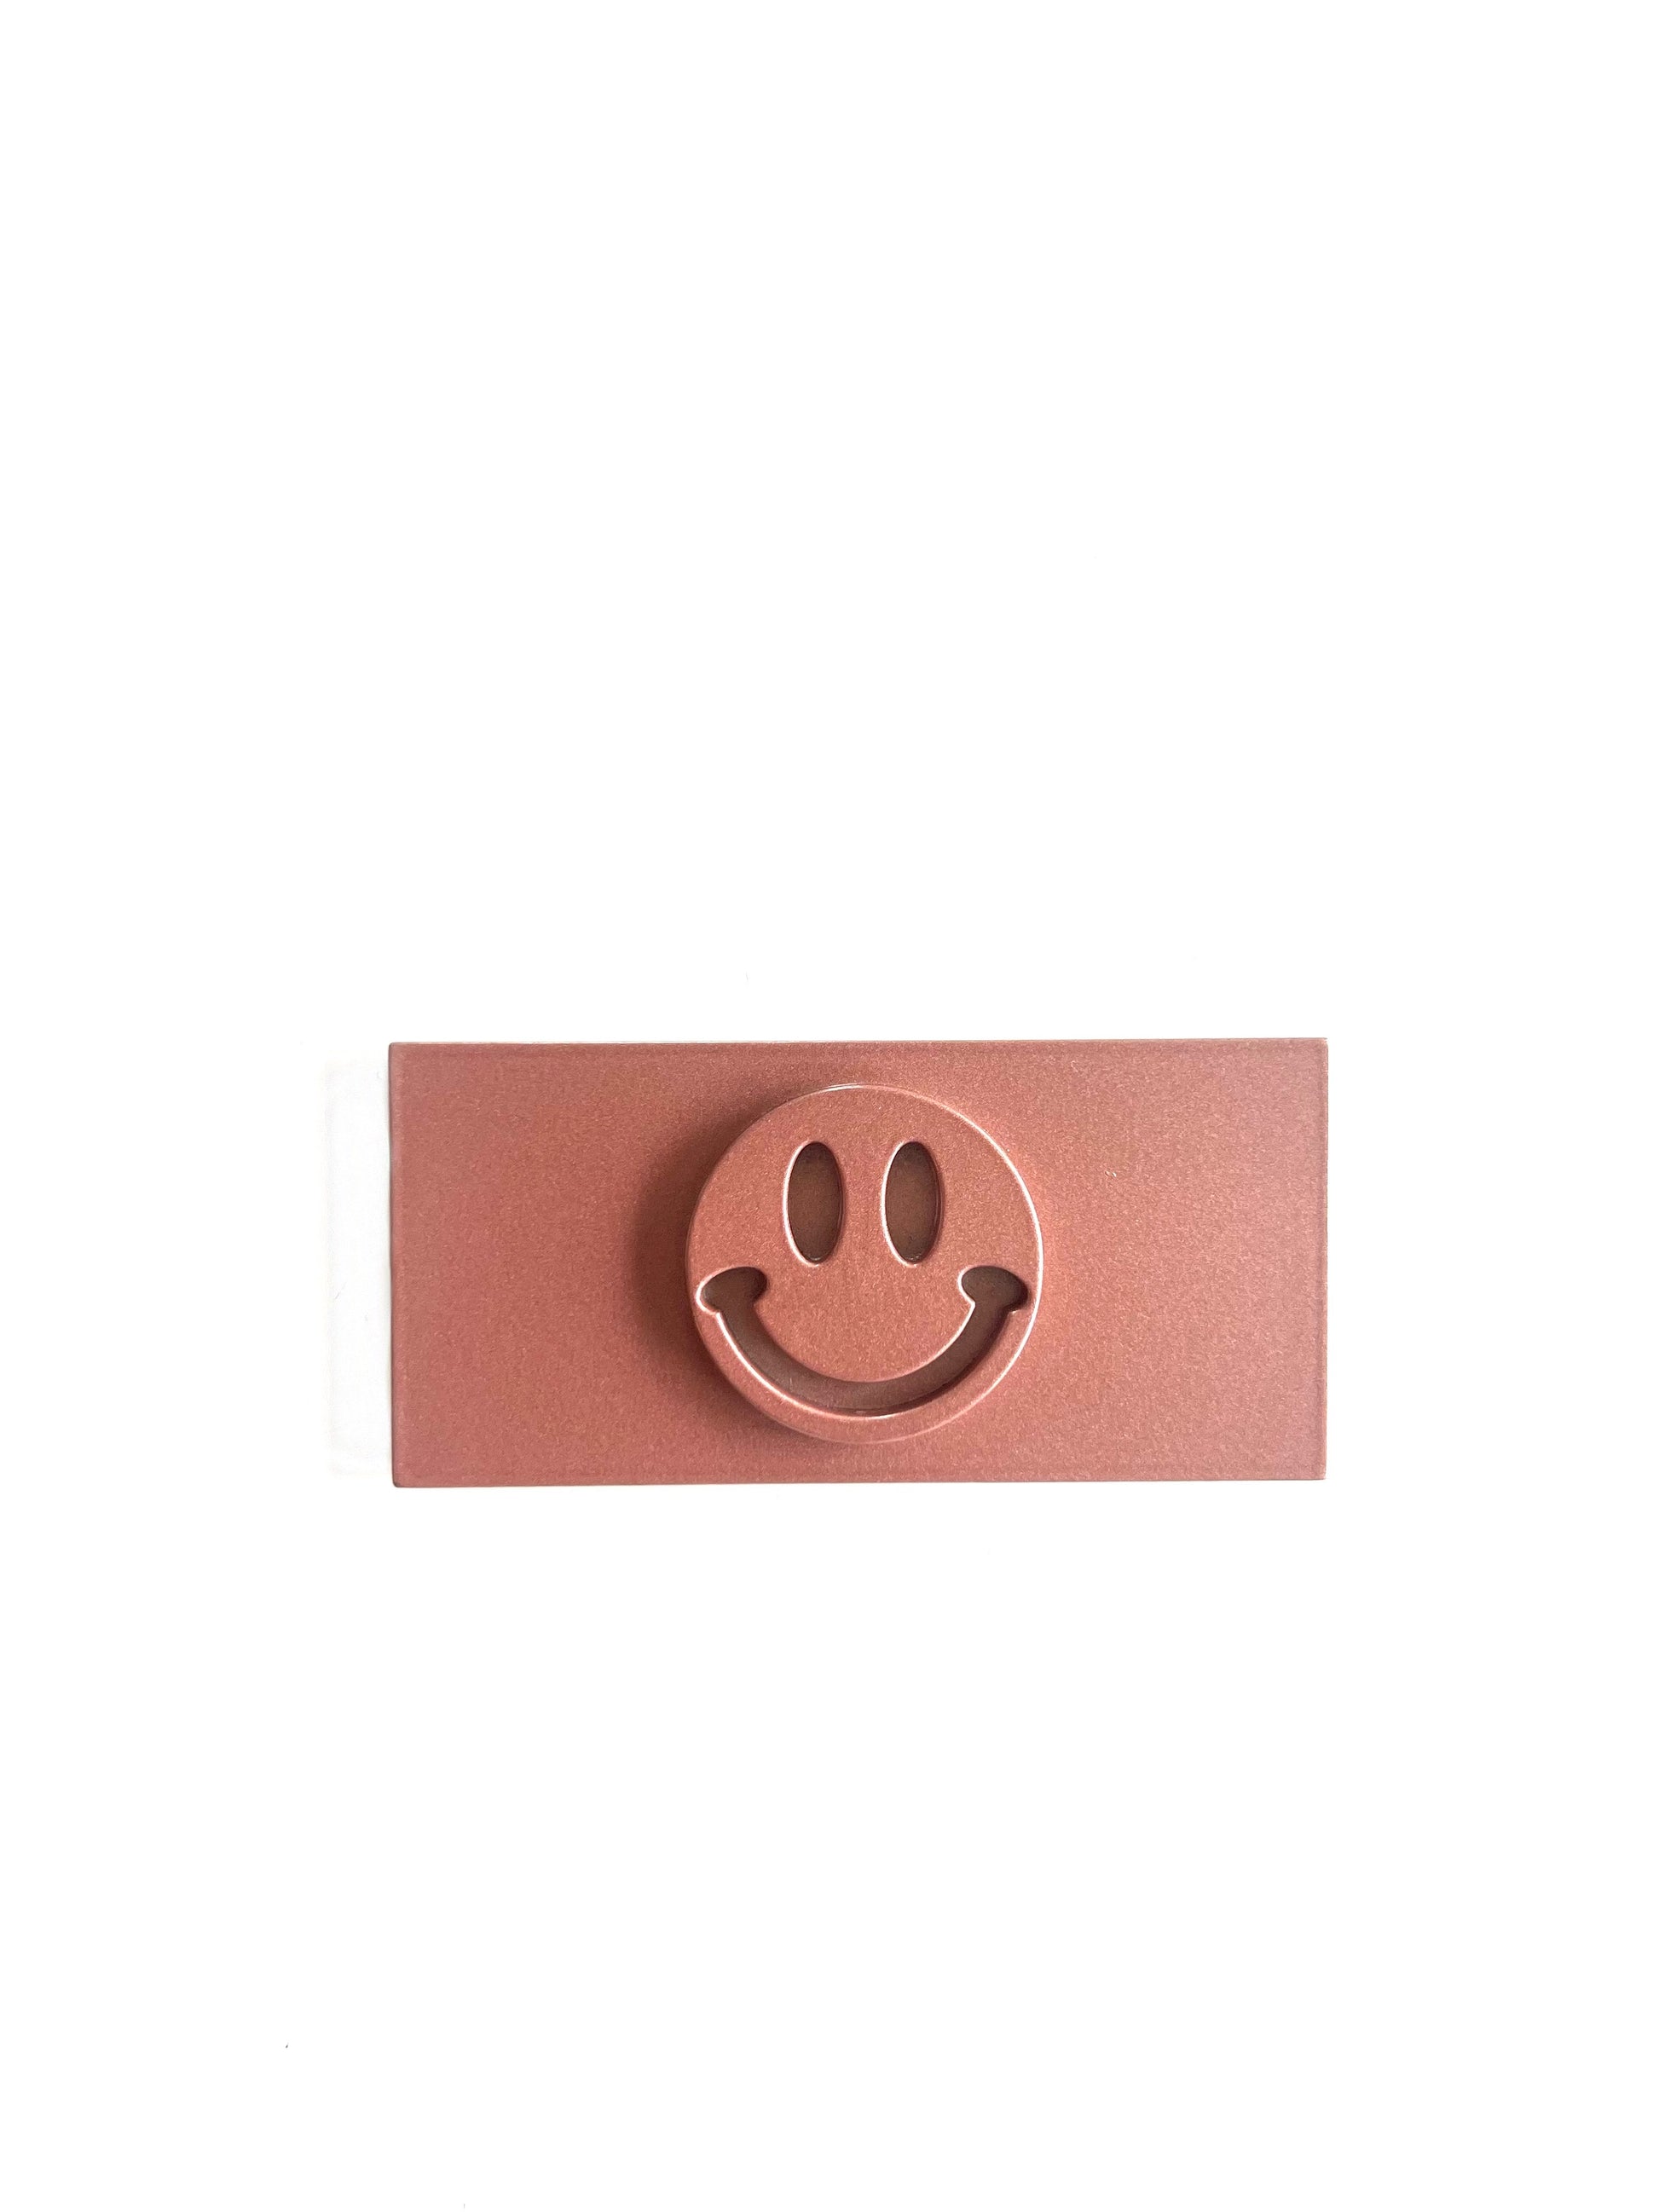 POPIRON ACCESSORY - SMILEY SHAPE PLATE (7110527123535)